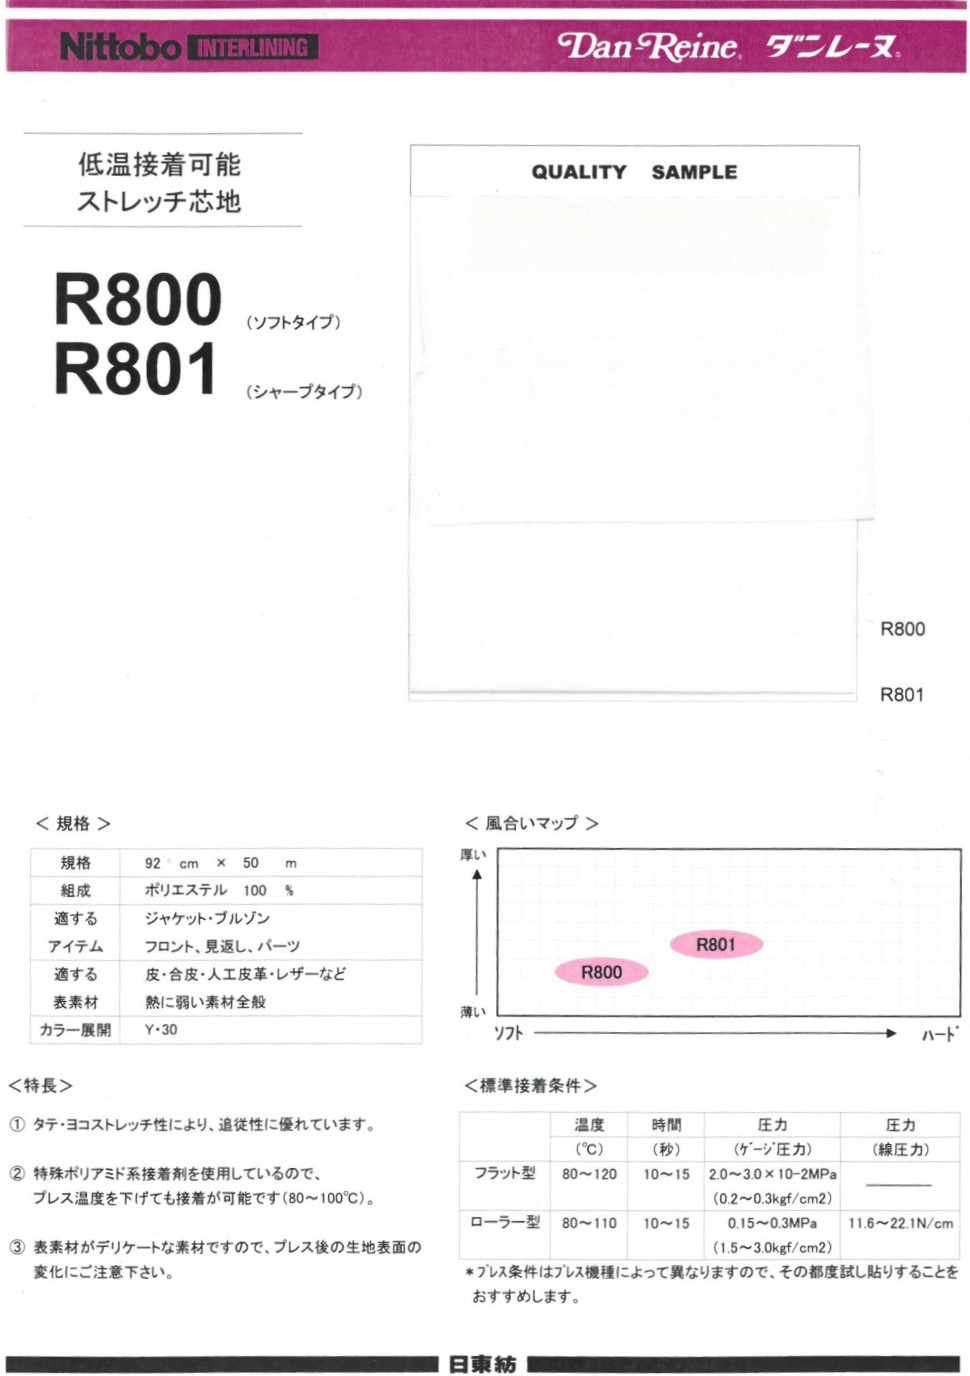 R800 Danlaine Adesivo De Baixa Temperatura Stretch Interlining Soft Type 20D[Entrelinha] Nittobo